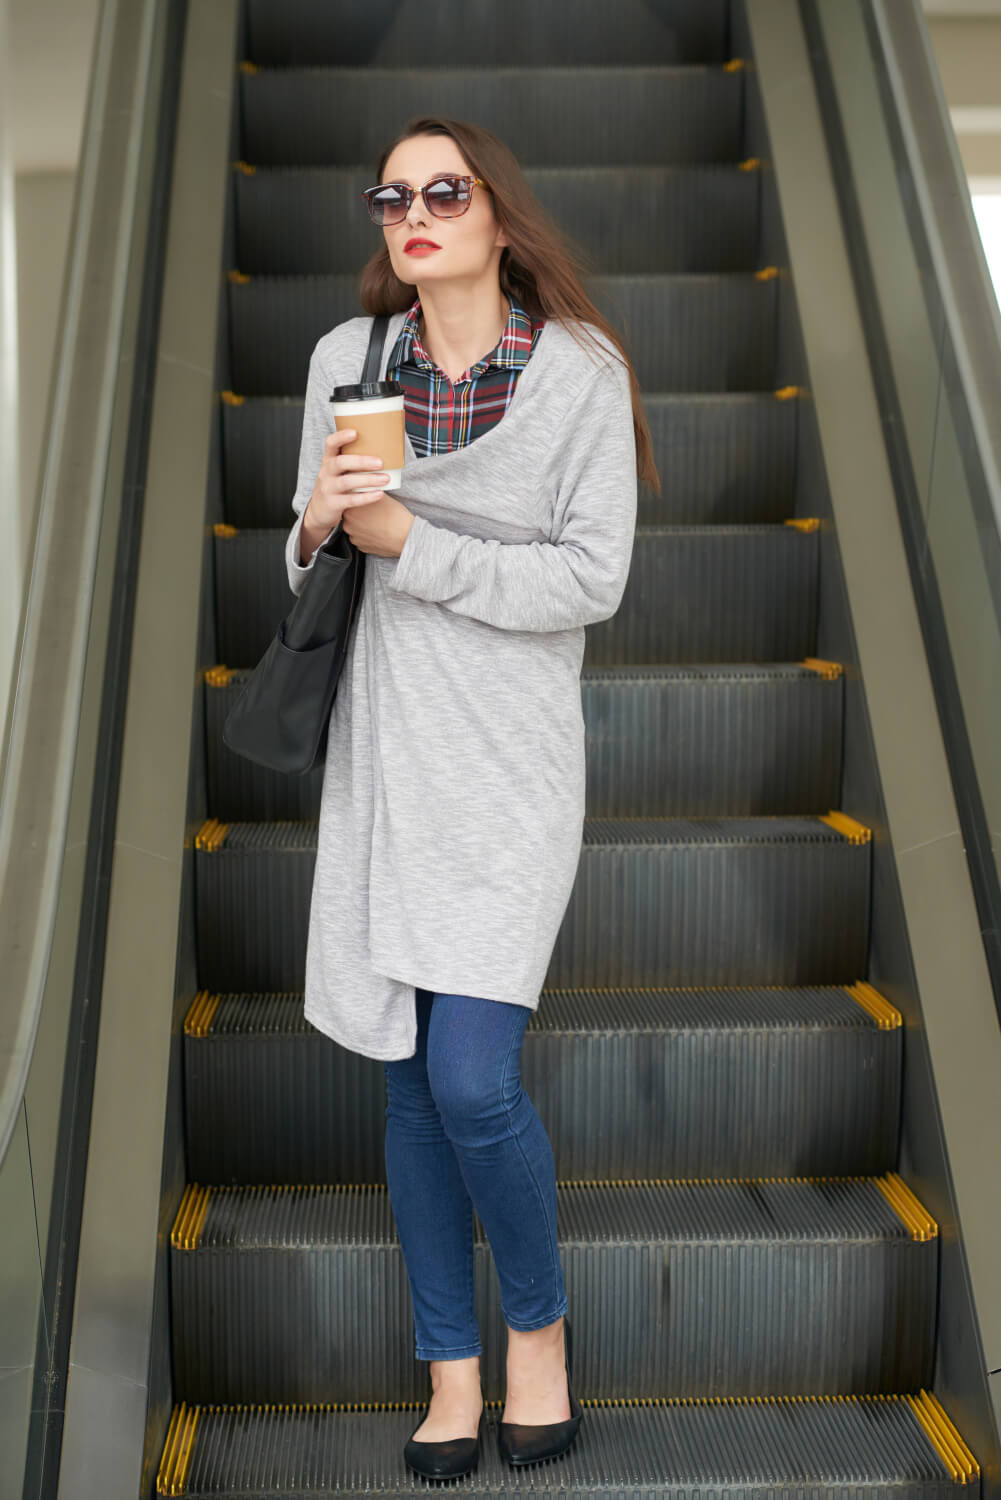 A woman using an escalator to go down